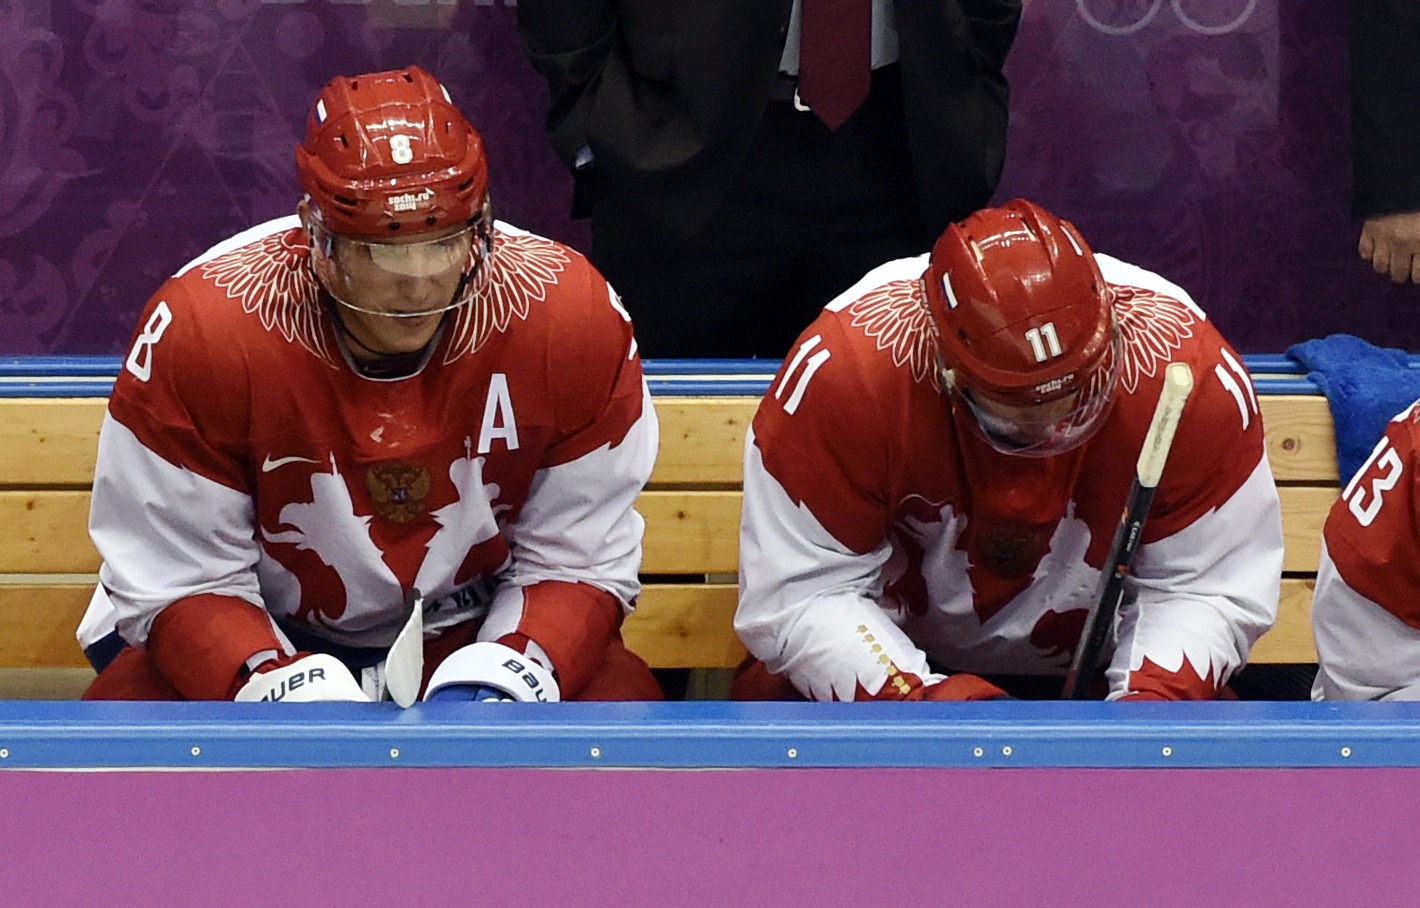 Russia Olympic Hockey Team 2014: Biggest Stars to Watch in Sochi